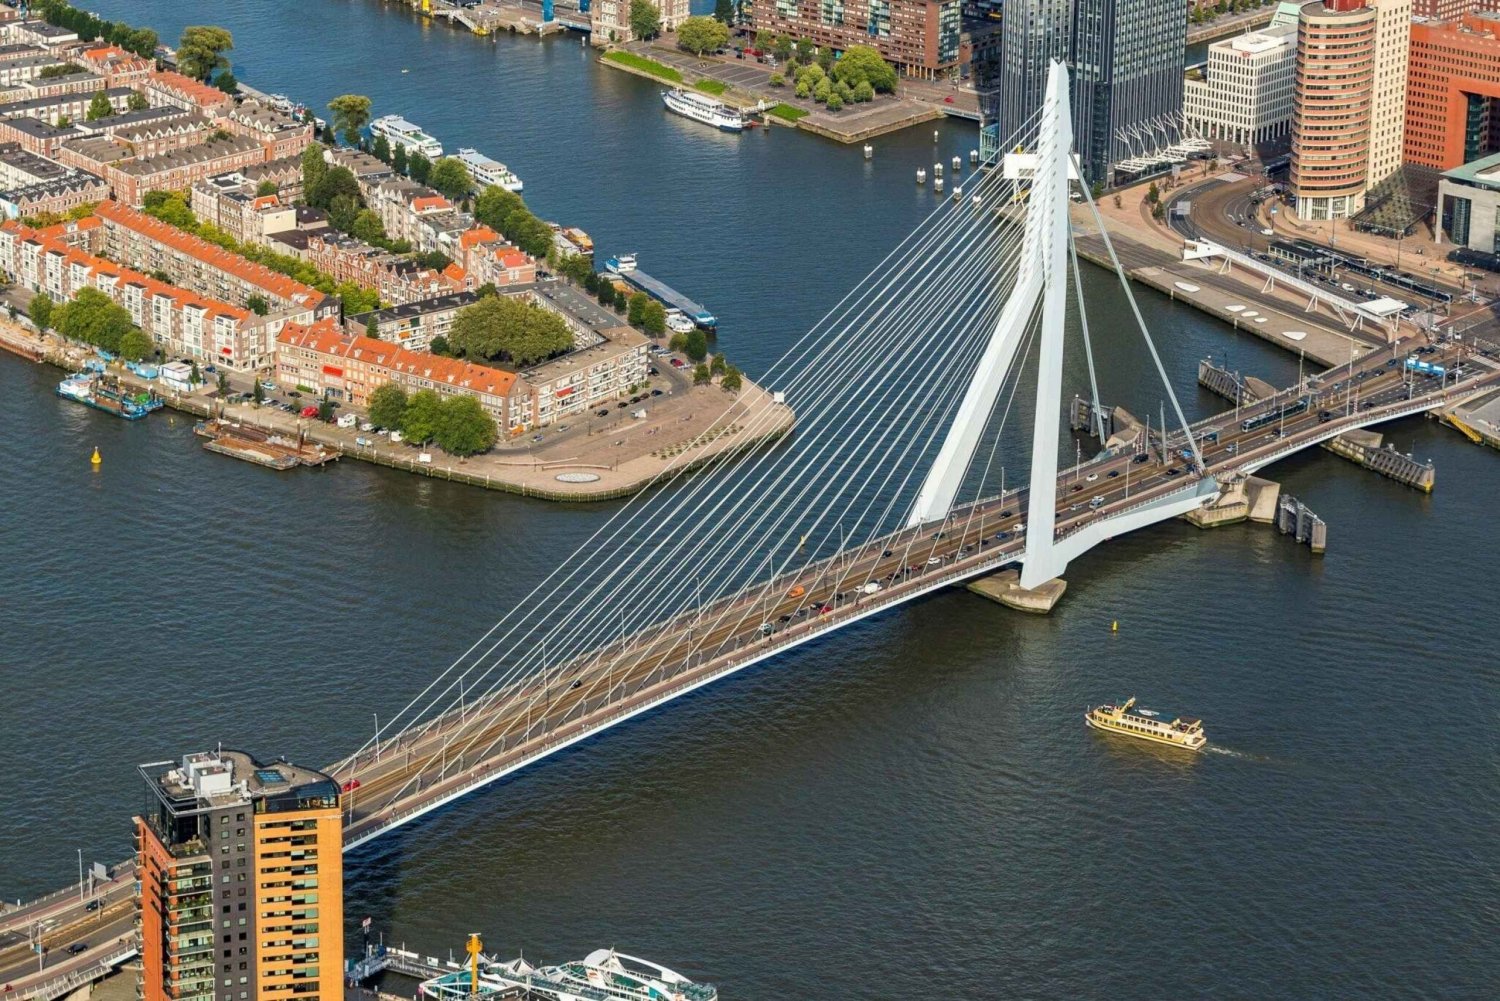 Daglig spasertur og båttur i Rotterdam og Kinderdijk